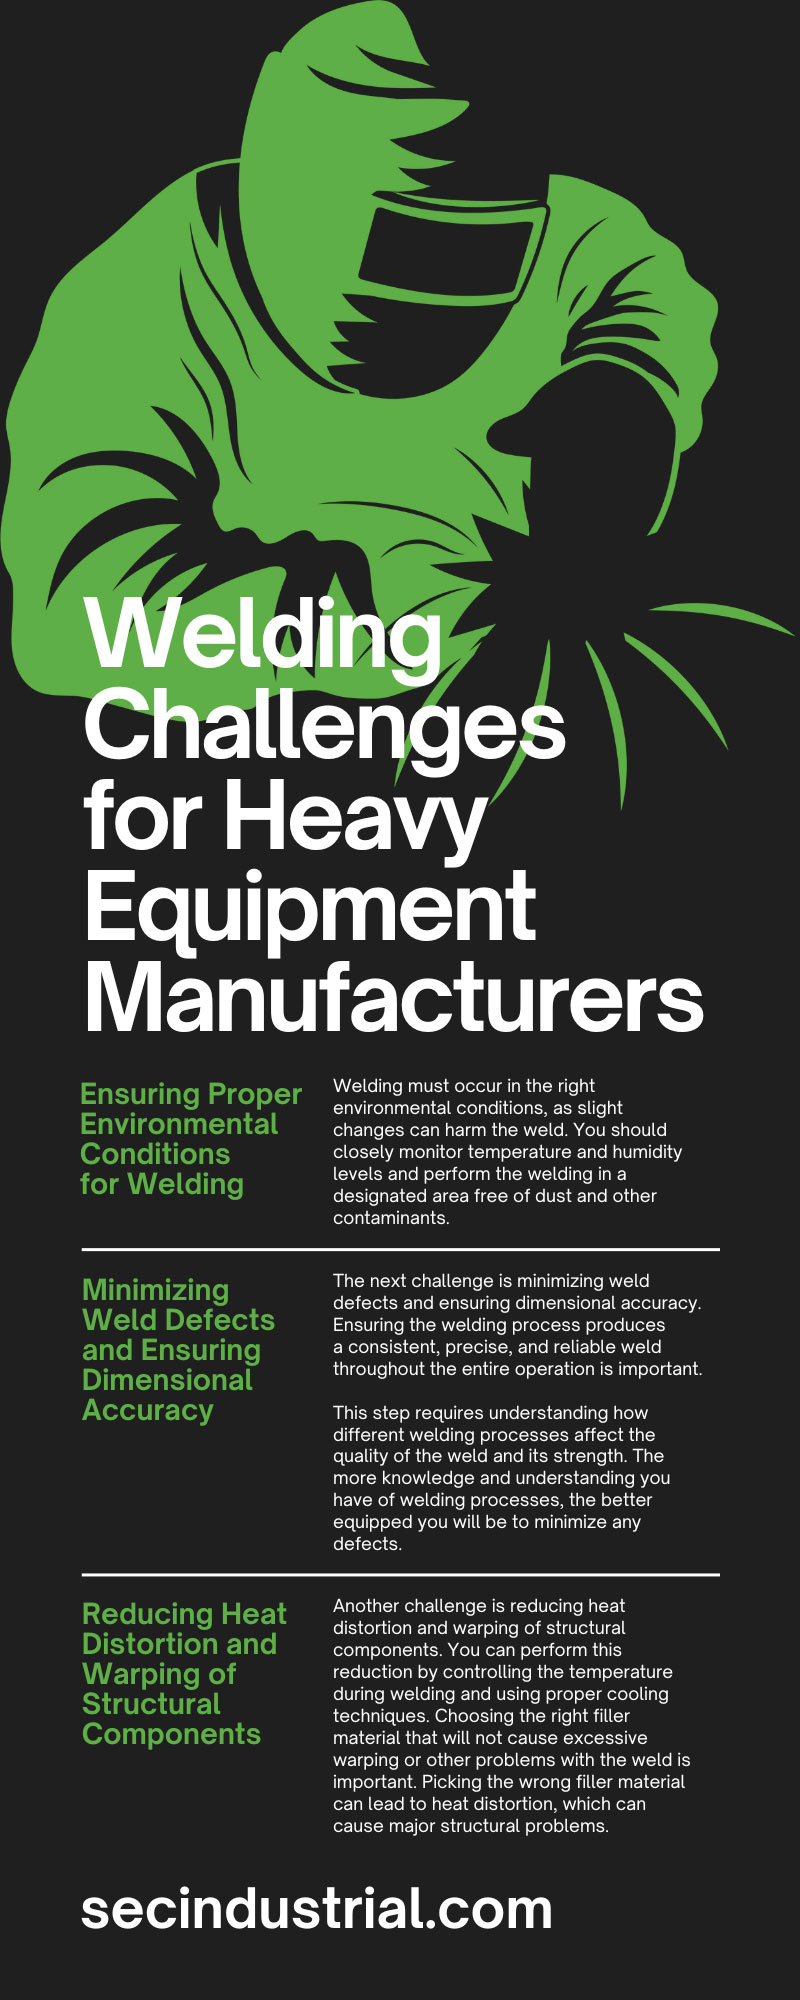 7 Welding Challenges for Heavy Equipment Manufacturers